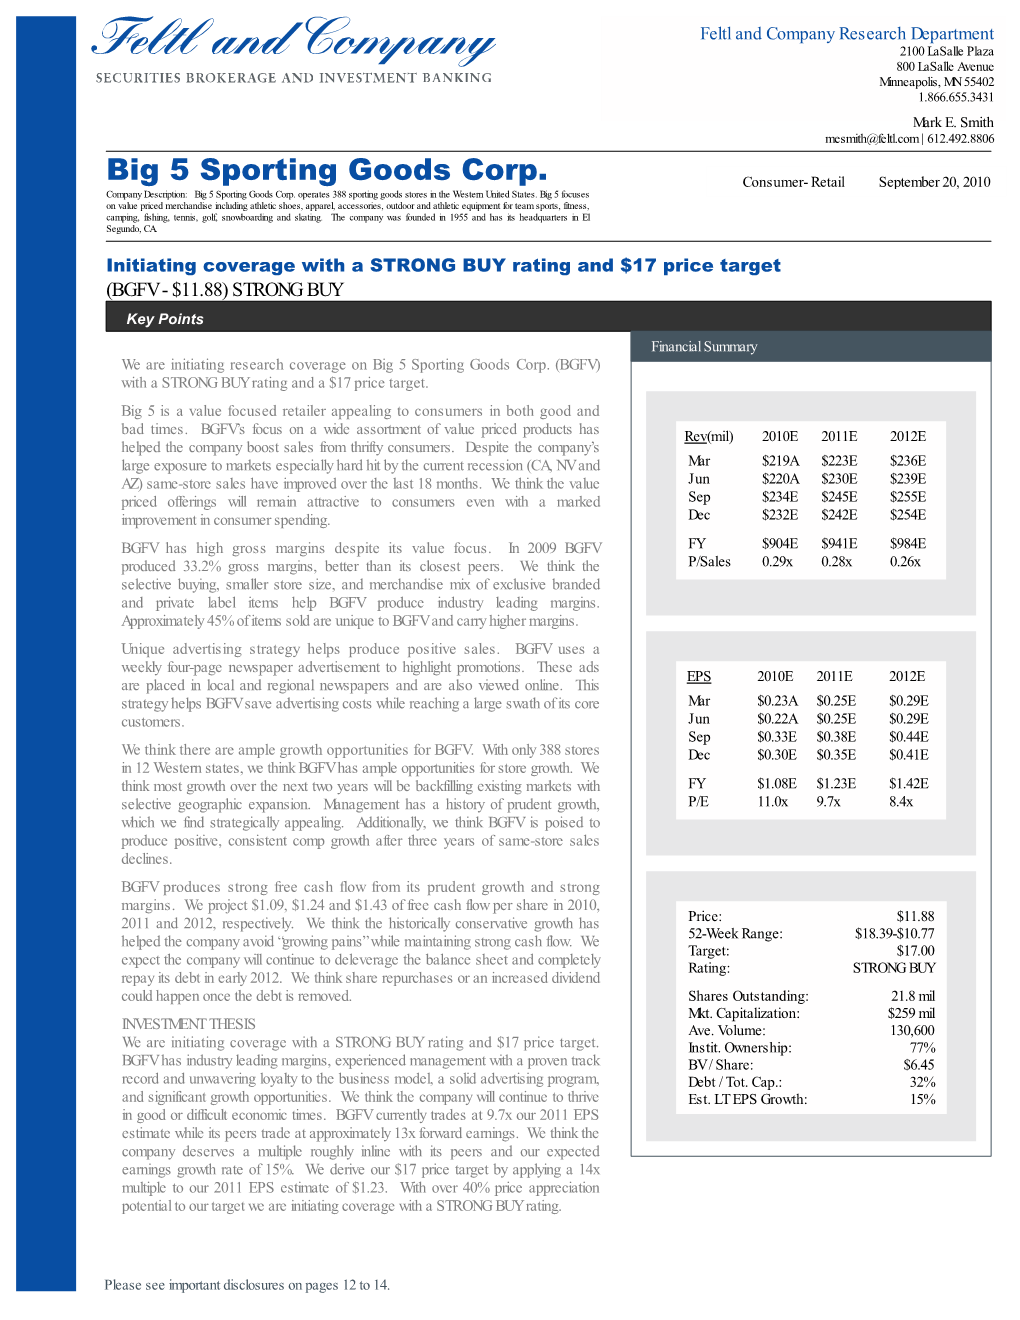 Big 5 Sporting Goods Corp. Consumer- Retail Se P Tember 20, 2010 Company Description: Big 5 Sporting Goods Corp